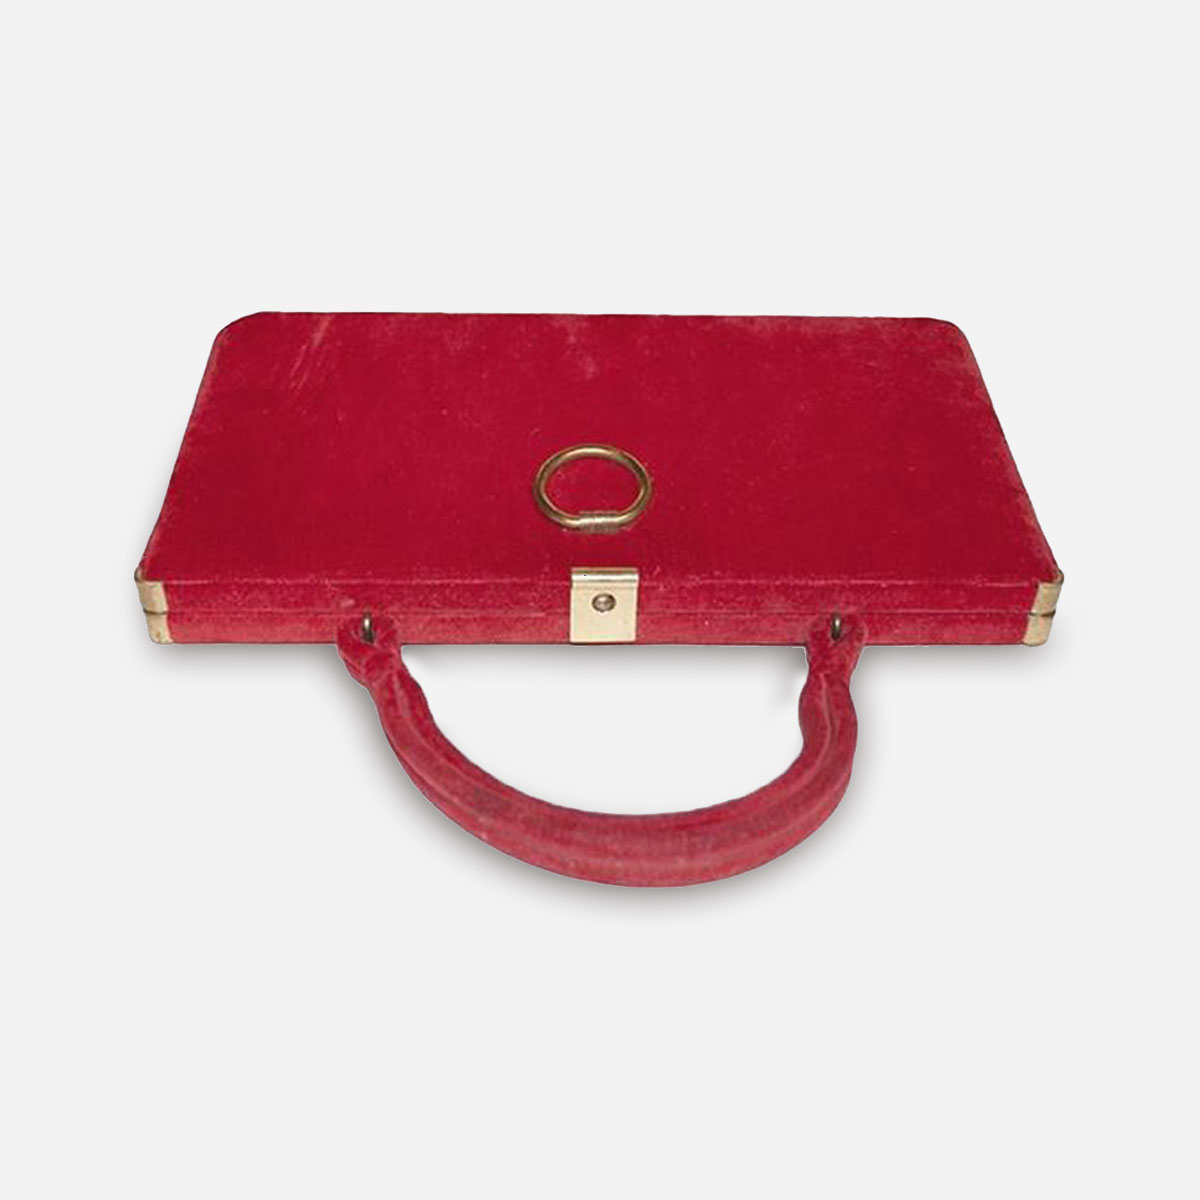 red vintage handbag